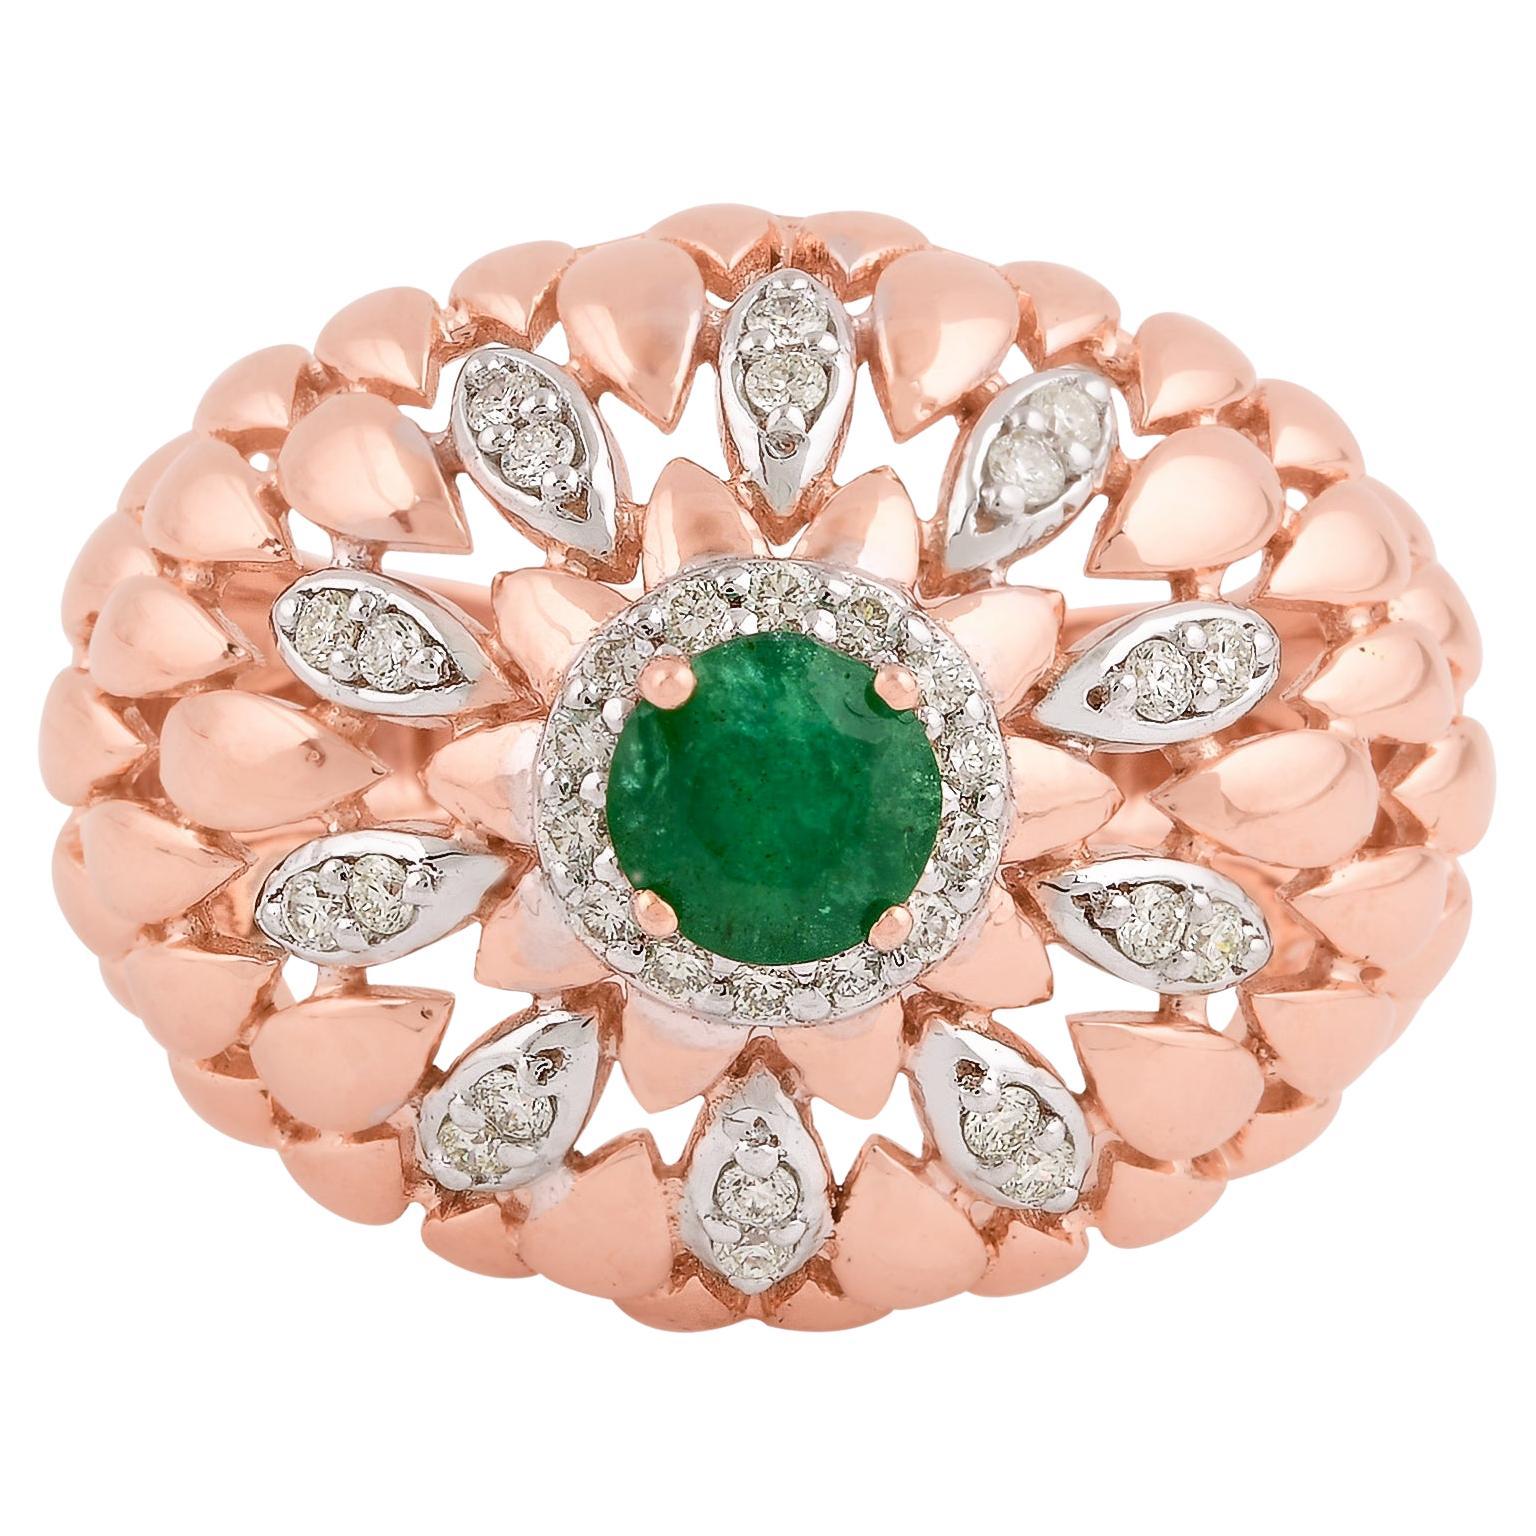 Zambian Emerald Gemstone Dome Ring Diamond Pave Solid 14k Rose Gold Fine Jewelry